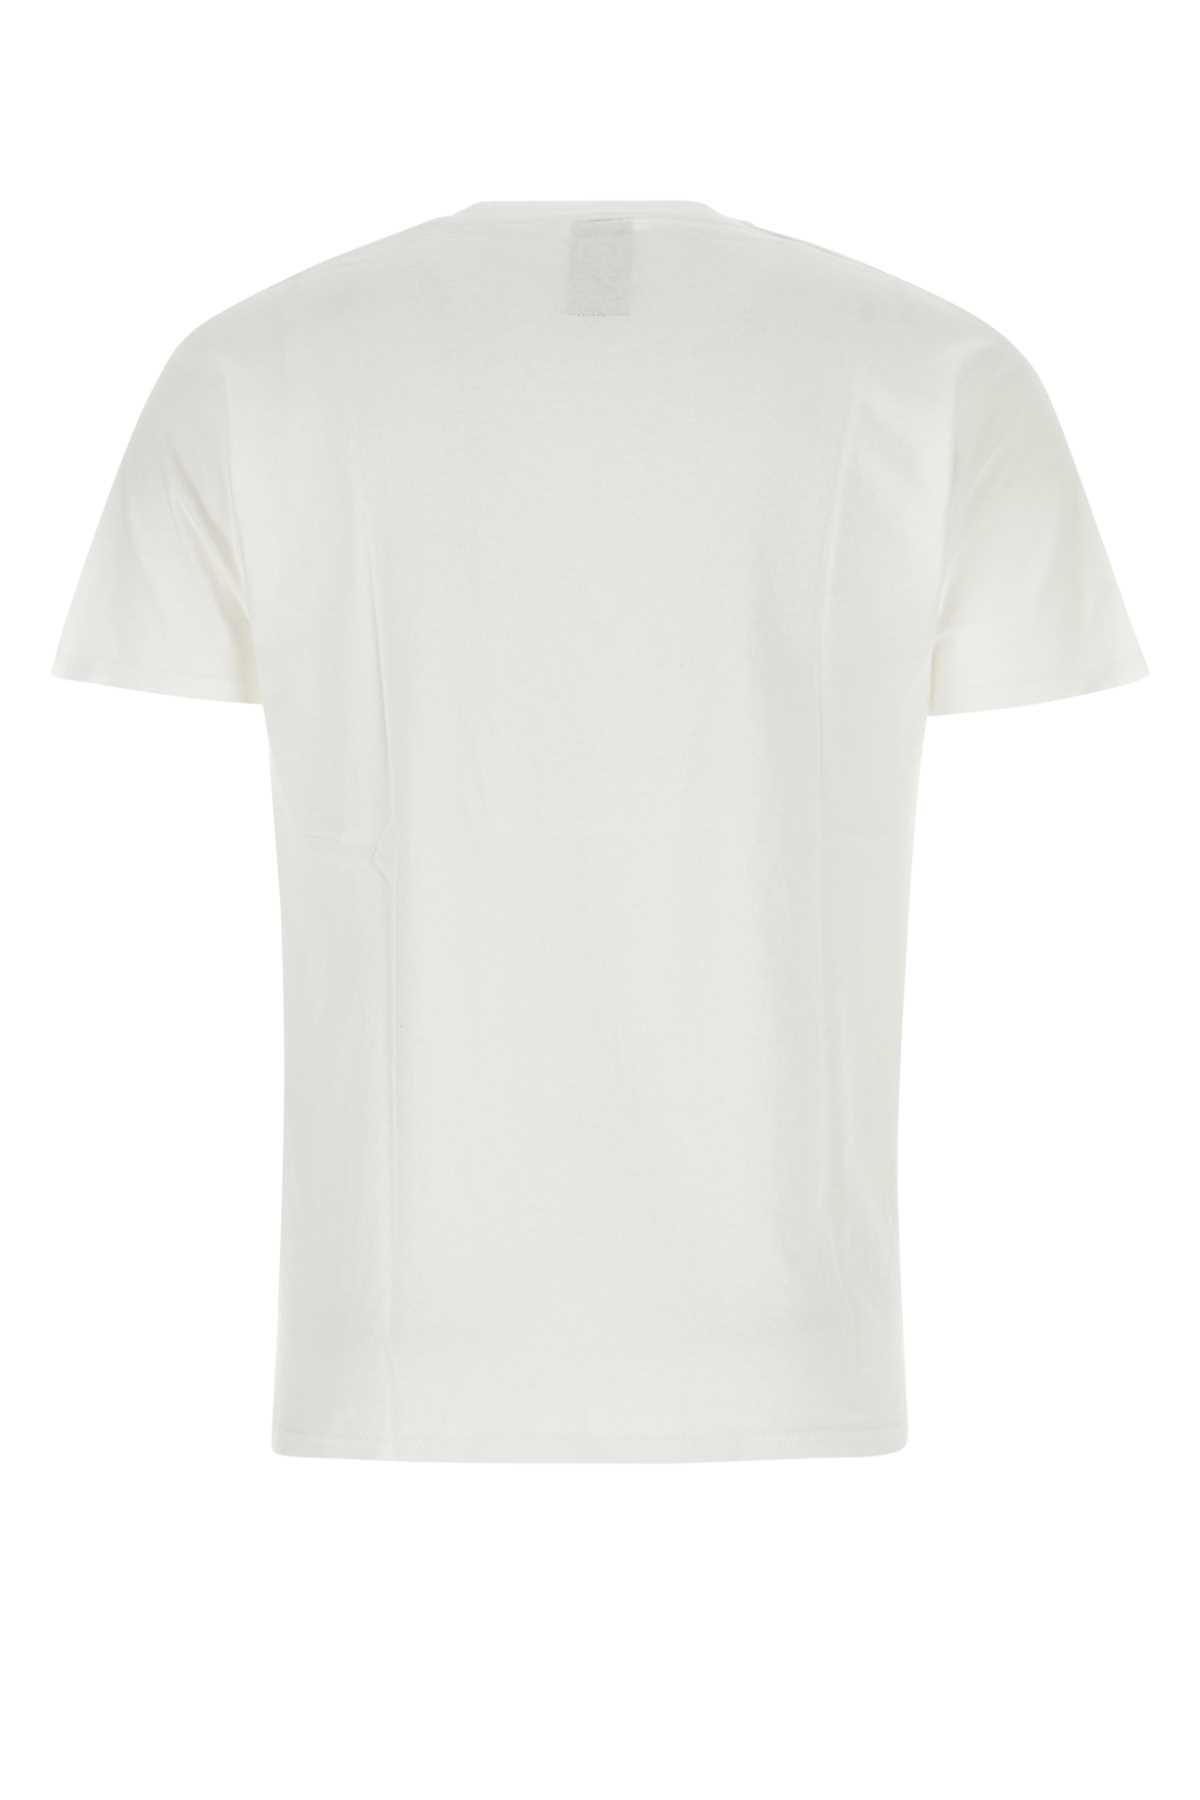 Shop Wild Donkey White Cotton T-shirt In Wd018